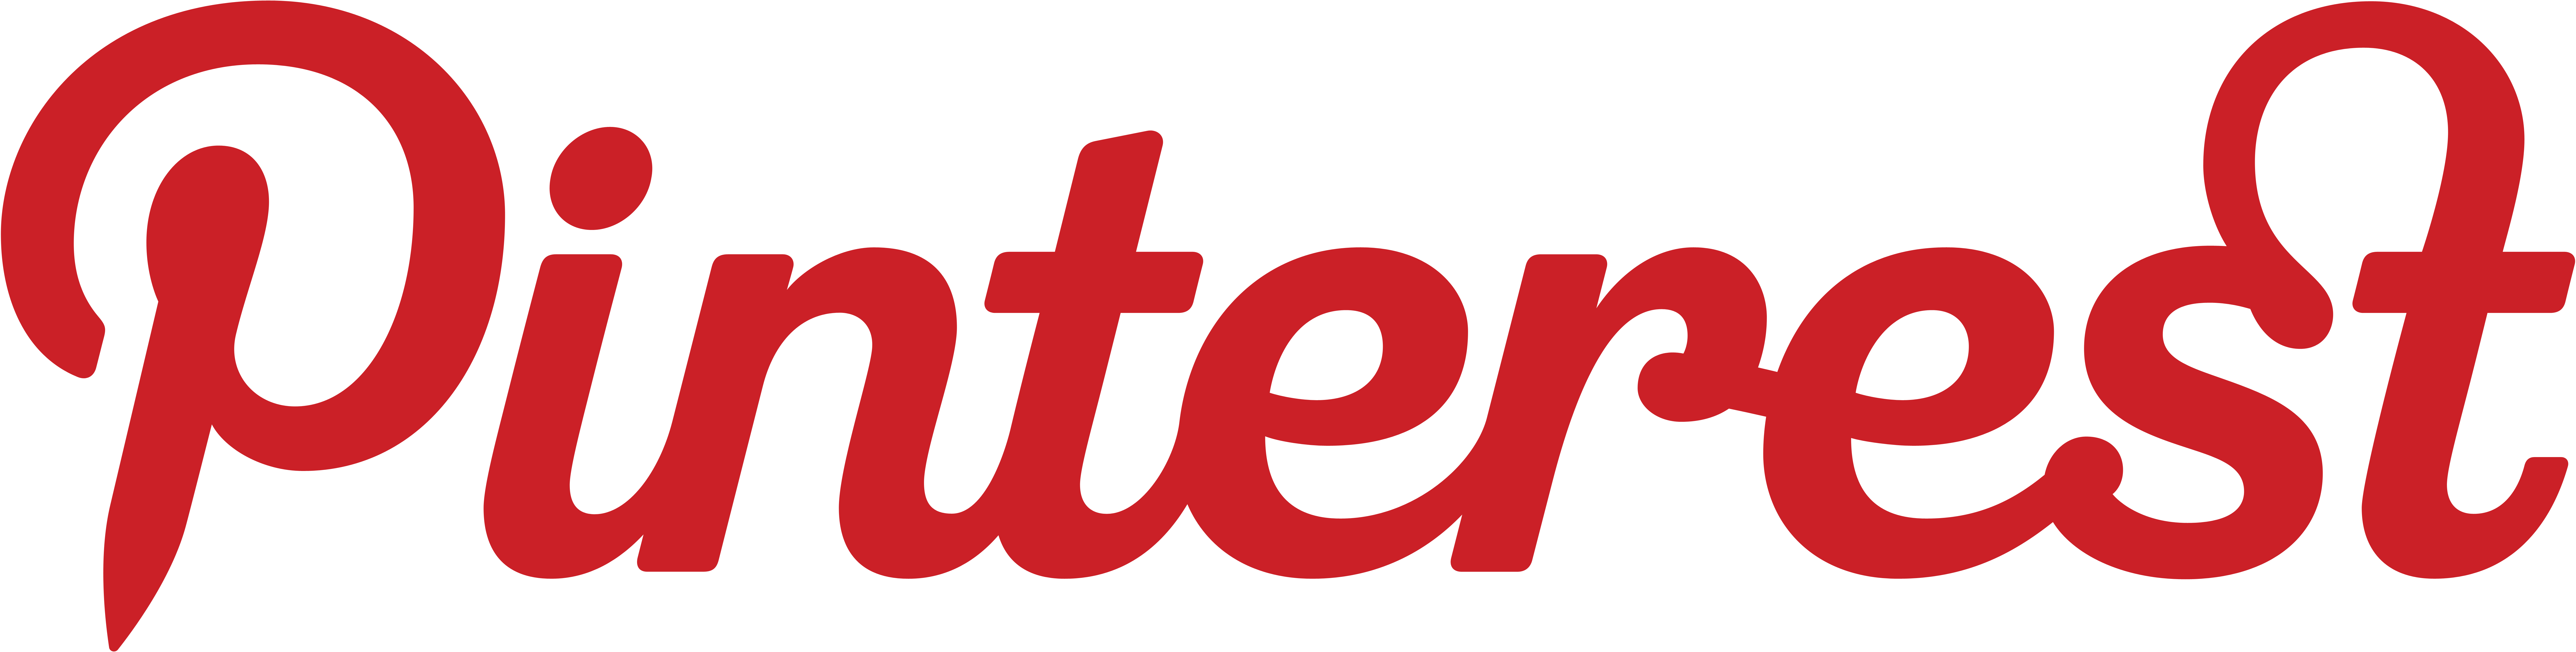 Pinterest logo, logotype